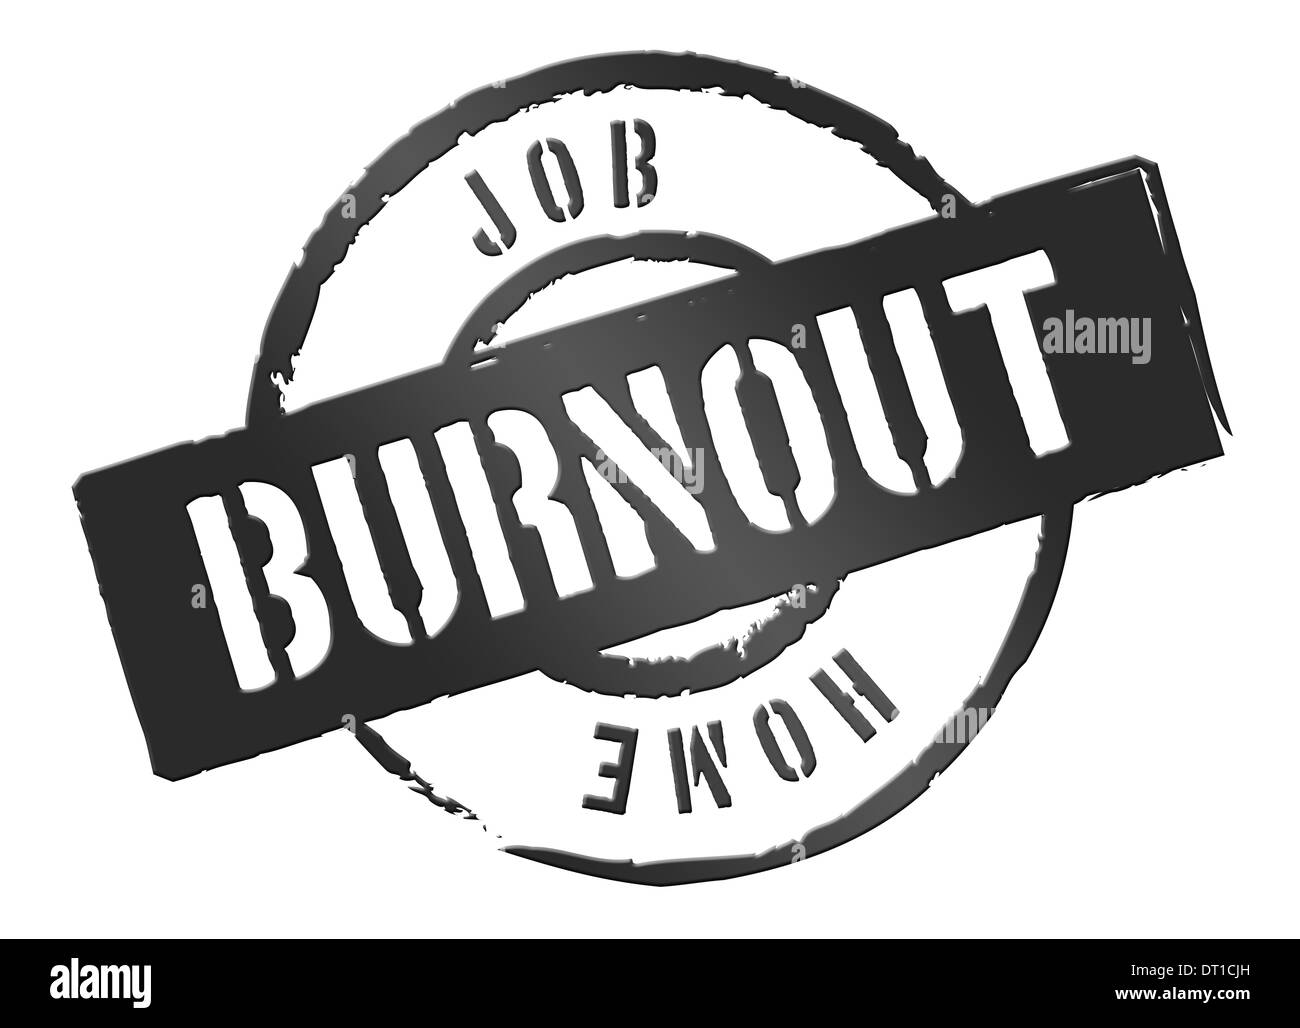 Burnout Stock Photo